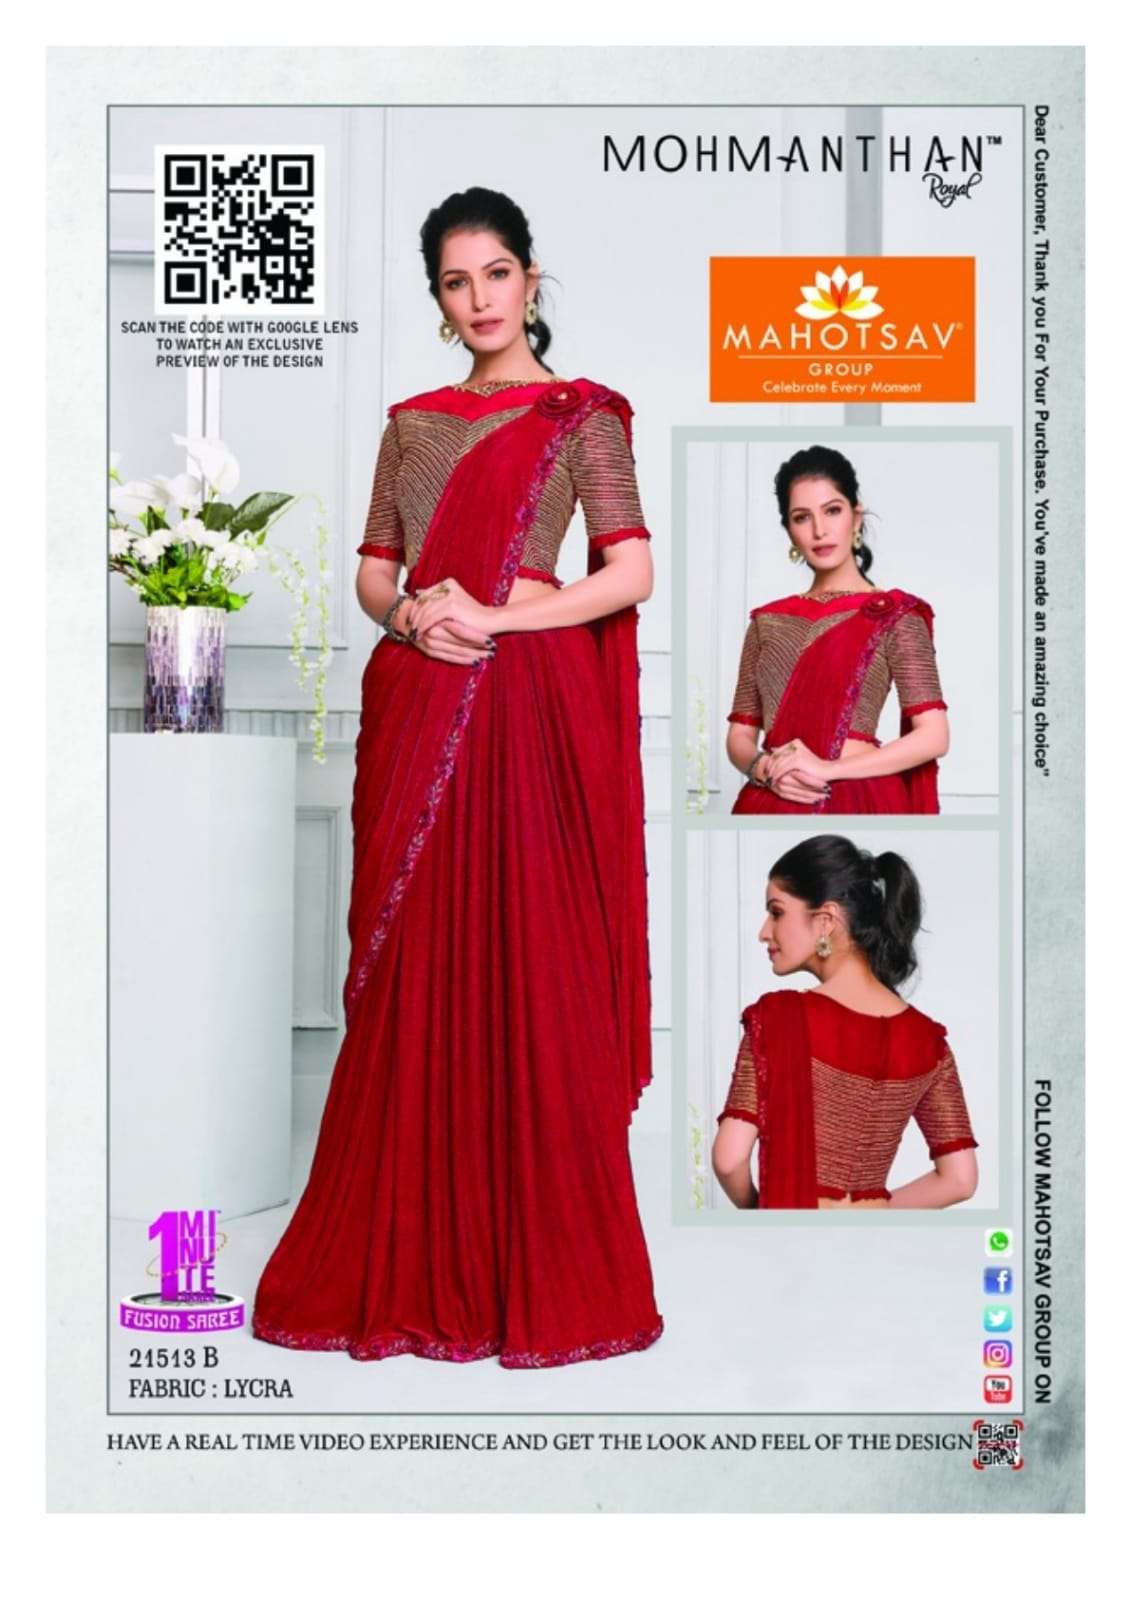 Mohmanthan Izzara By Mahotsav Sarees Surat 21501-215018 Series Branded Saris Catalogs Wholesaler